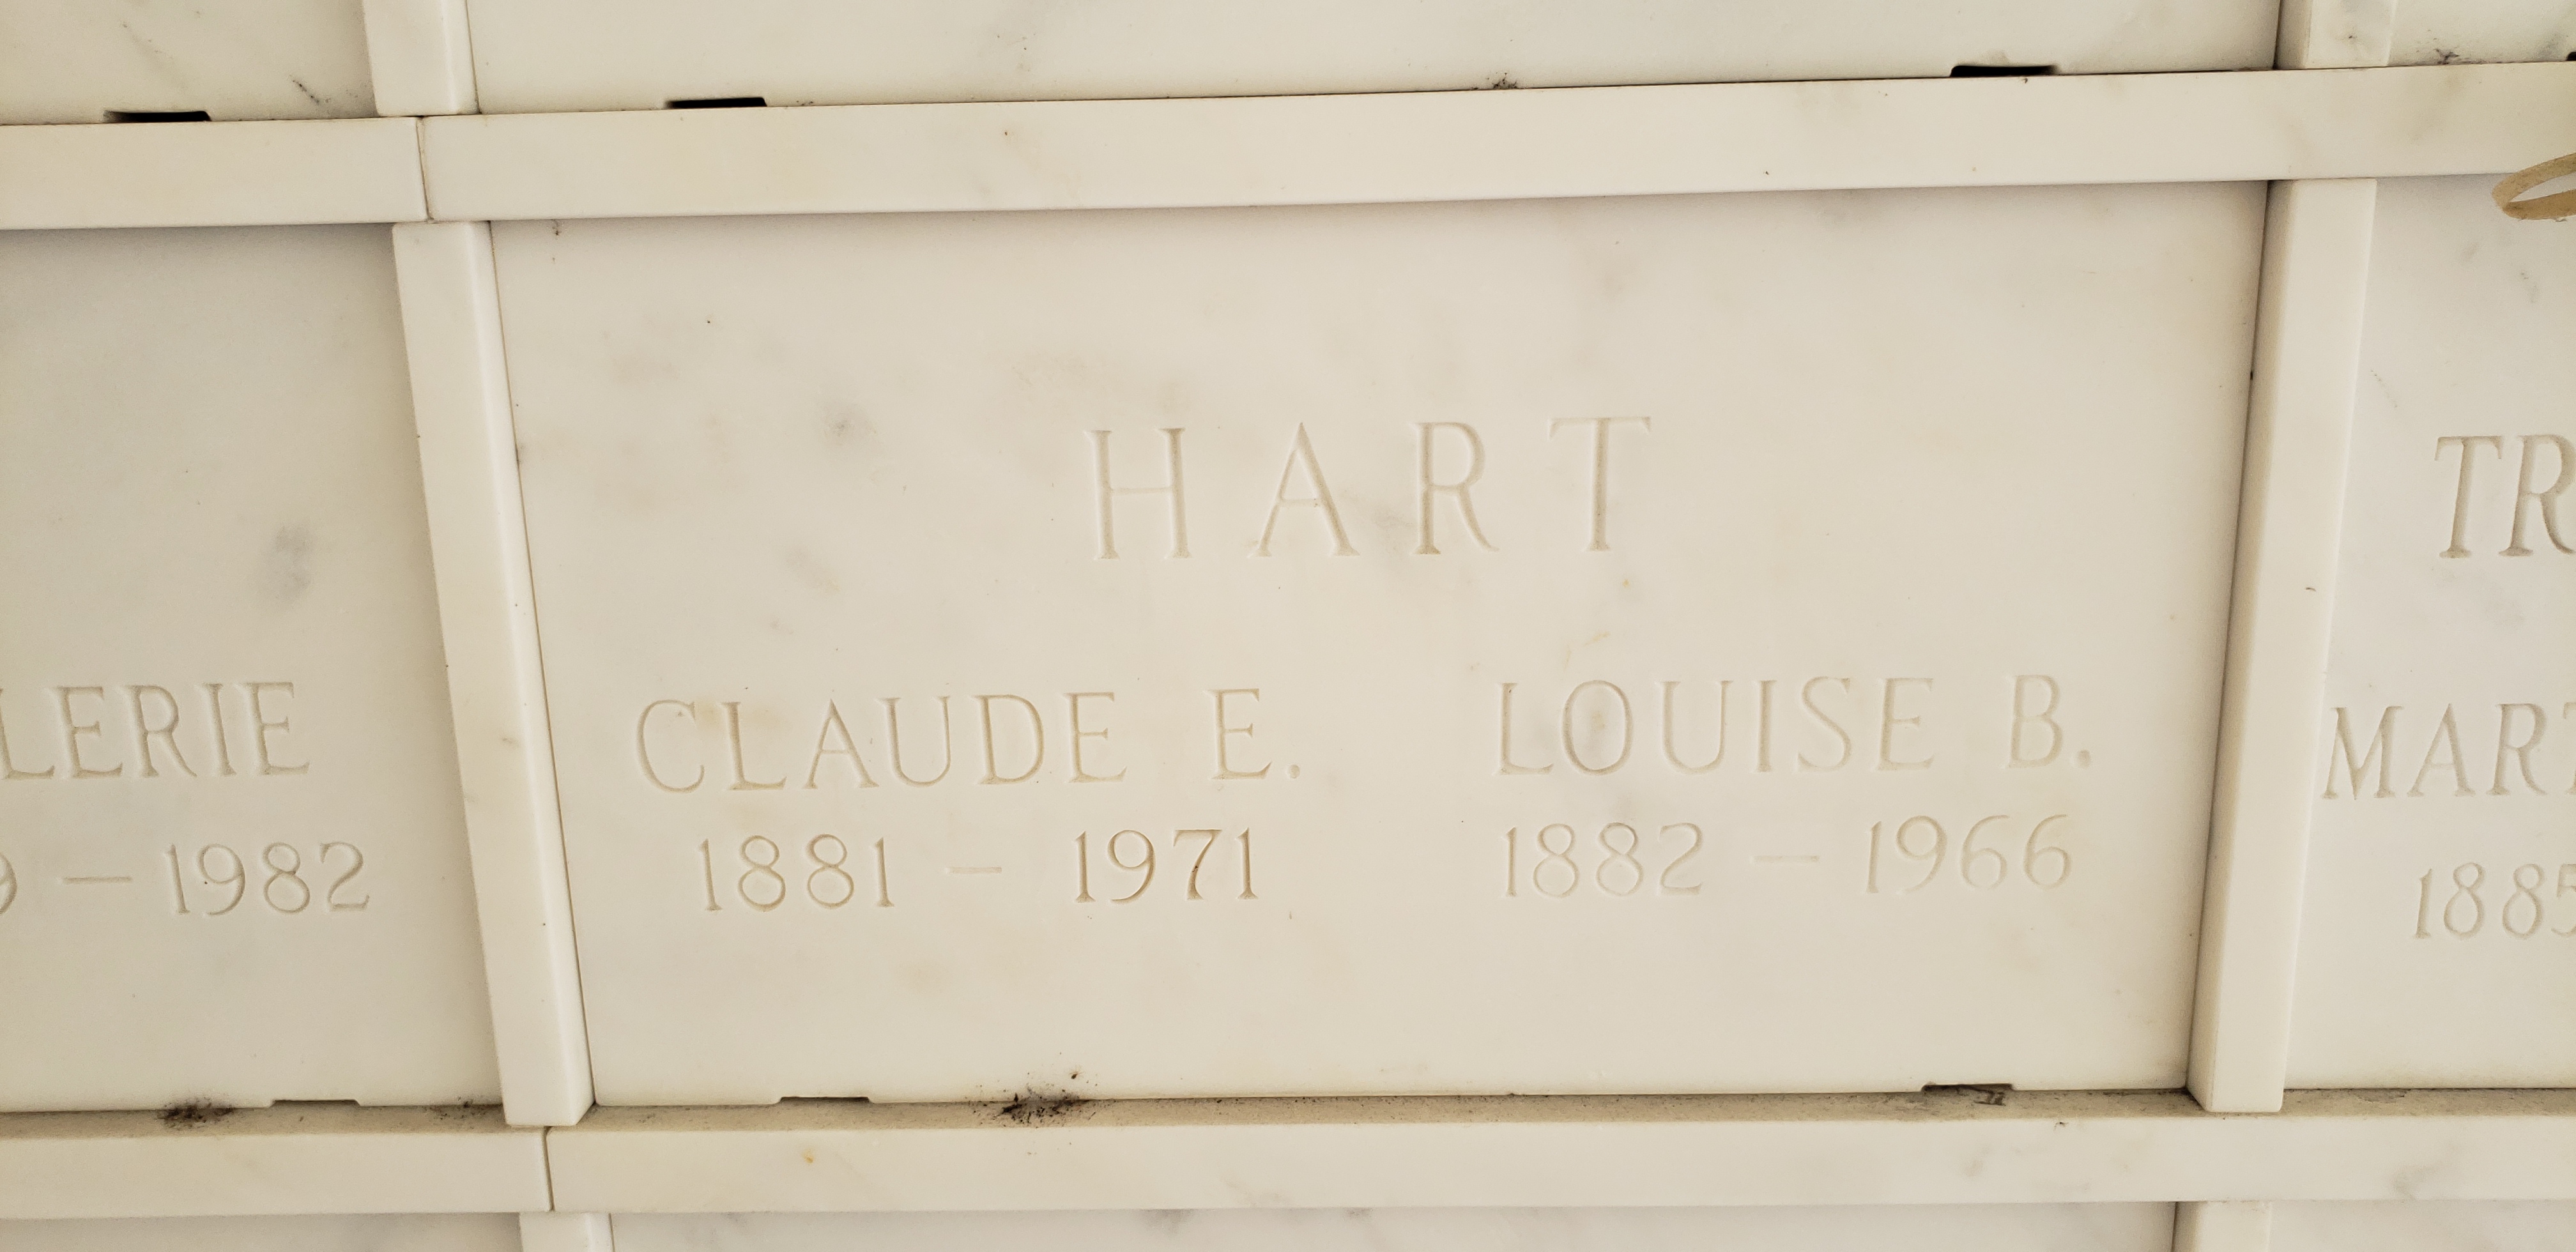 Louise B Hart